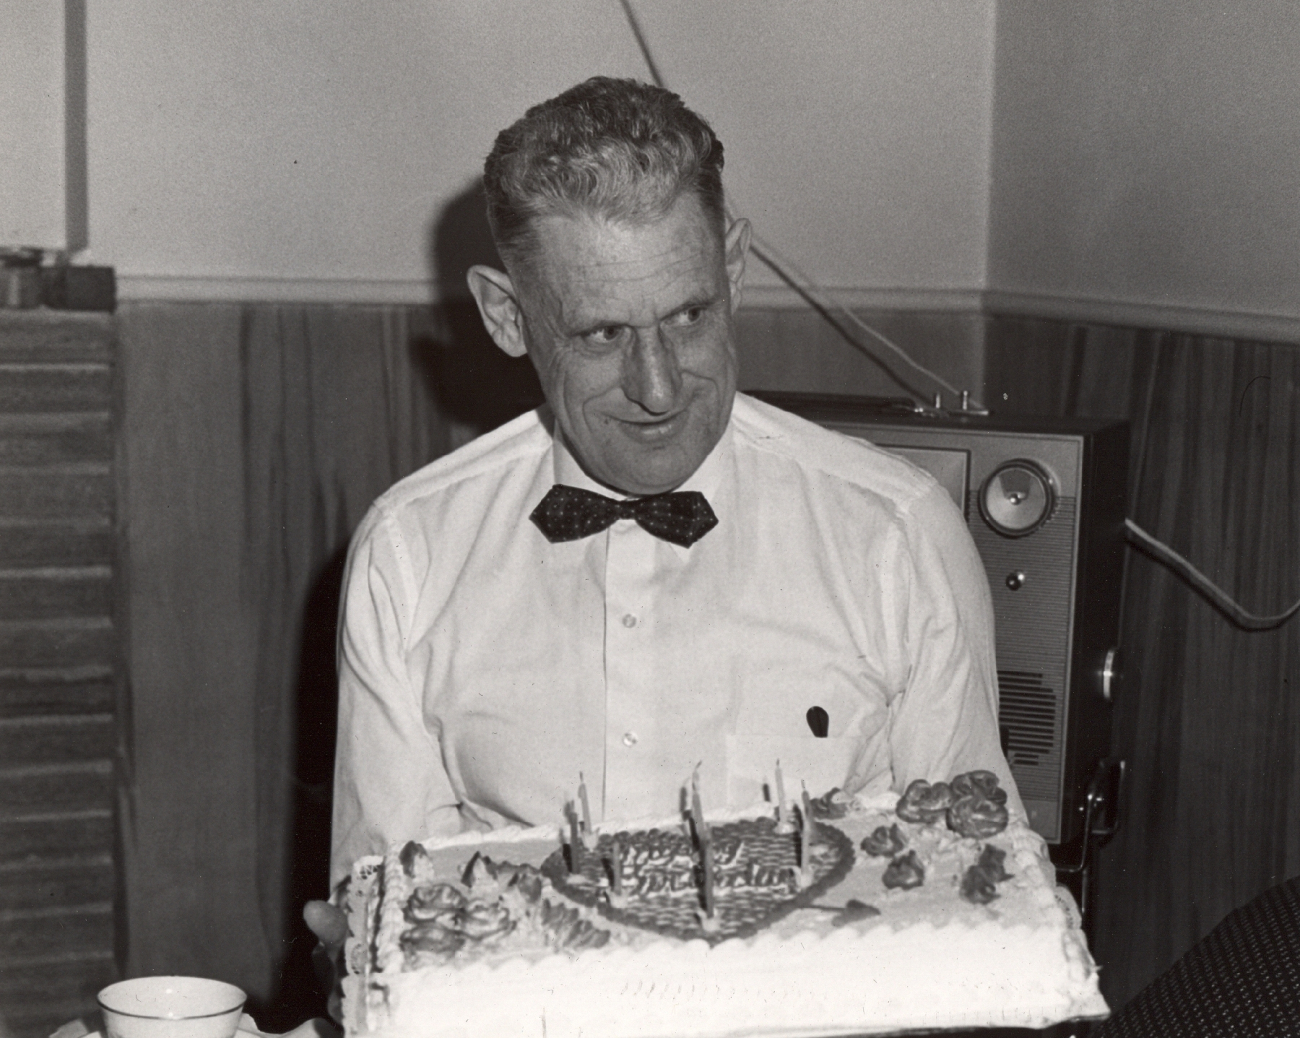 Commander David Whipp holding birthday cake